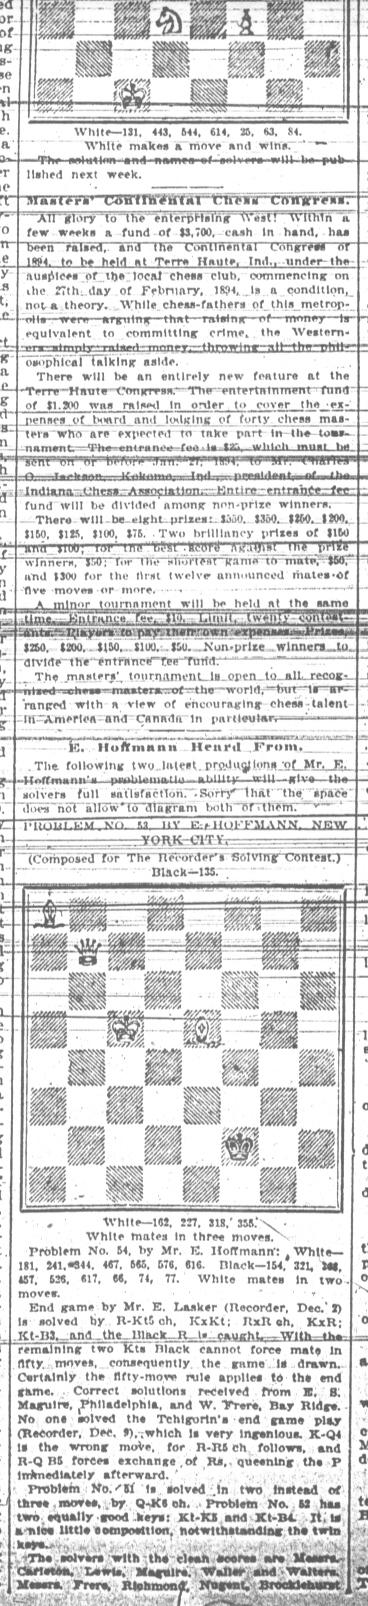 1893.12.16-02 New York Recorder.jpg